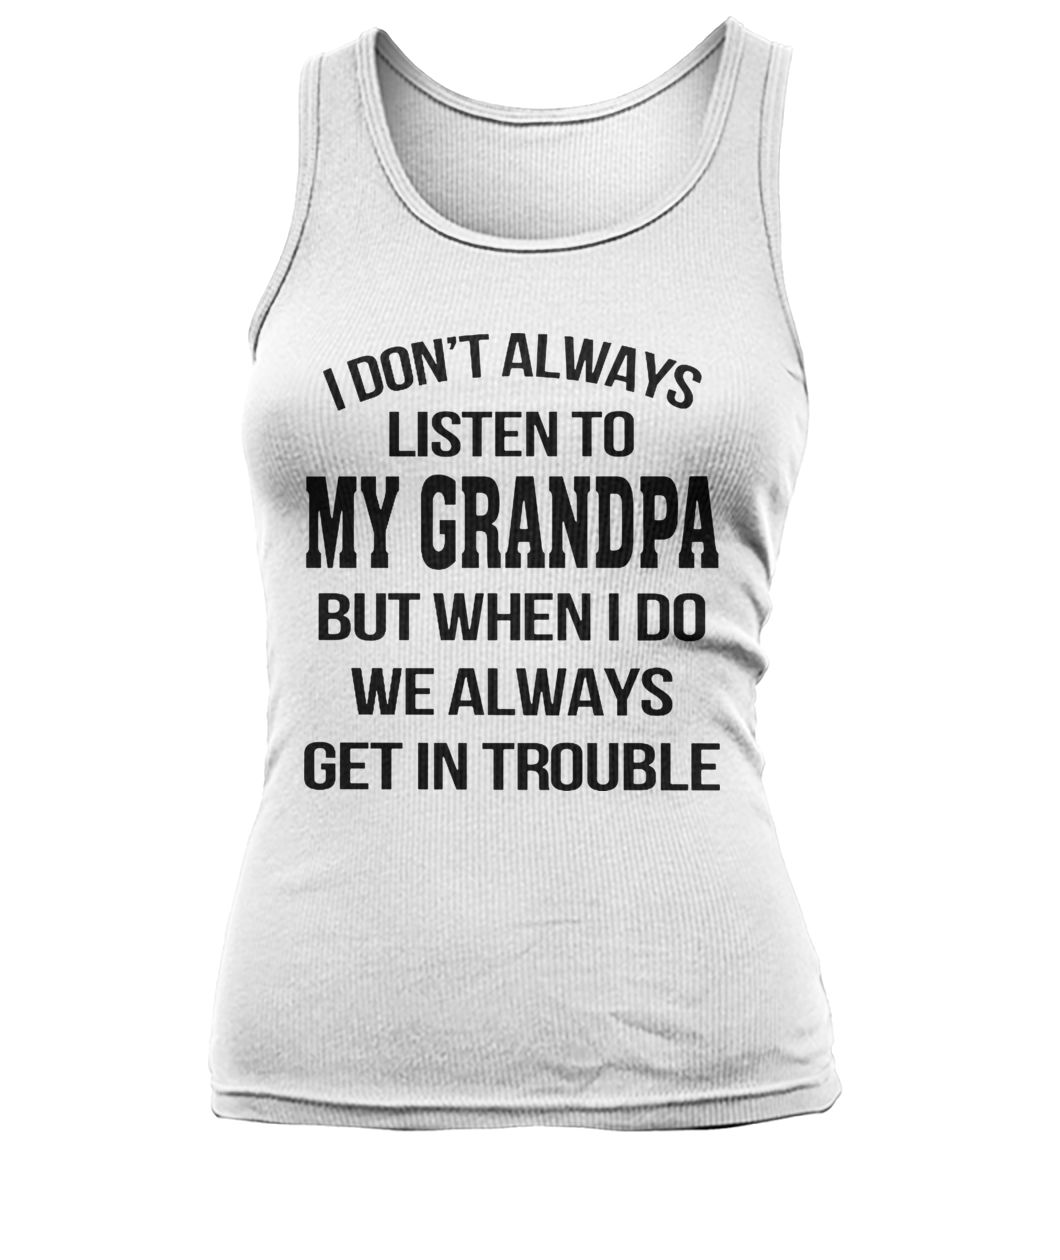 I don't always listen to my grandpa women's tank top